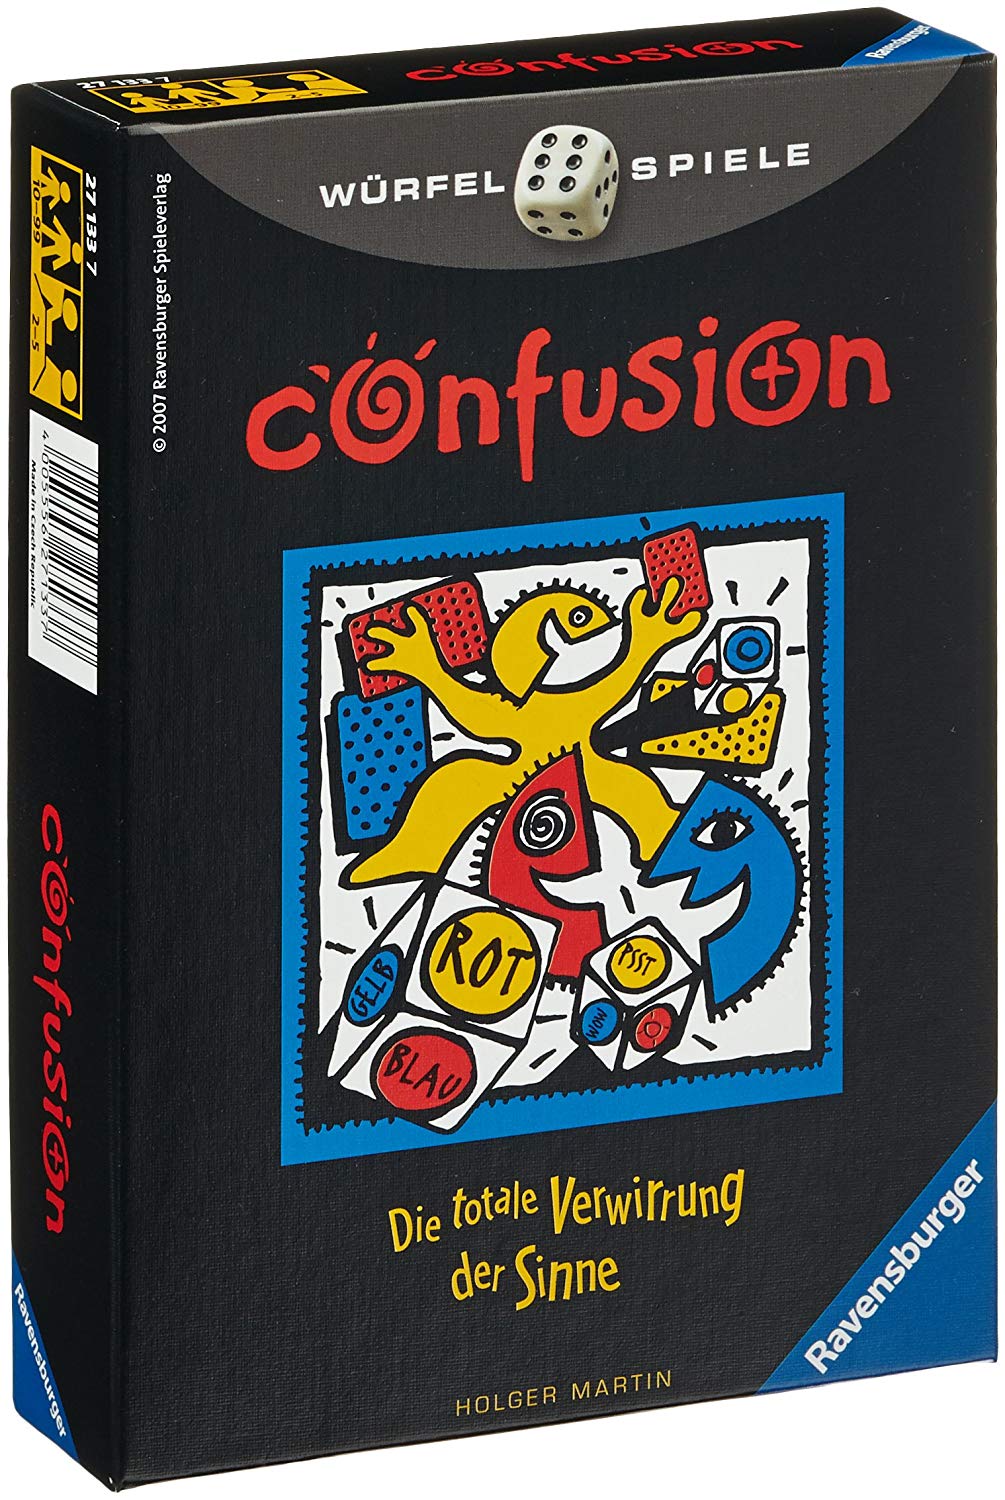 Confusion Spielanleitung – PDF Download 0 (0)